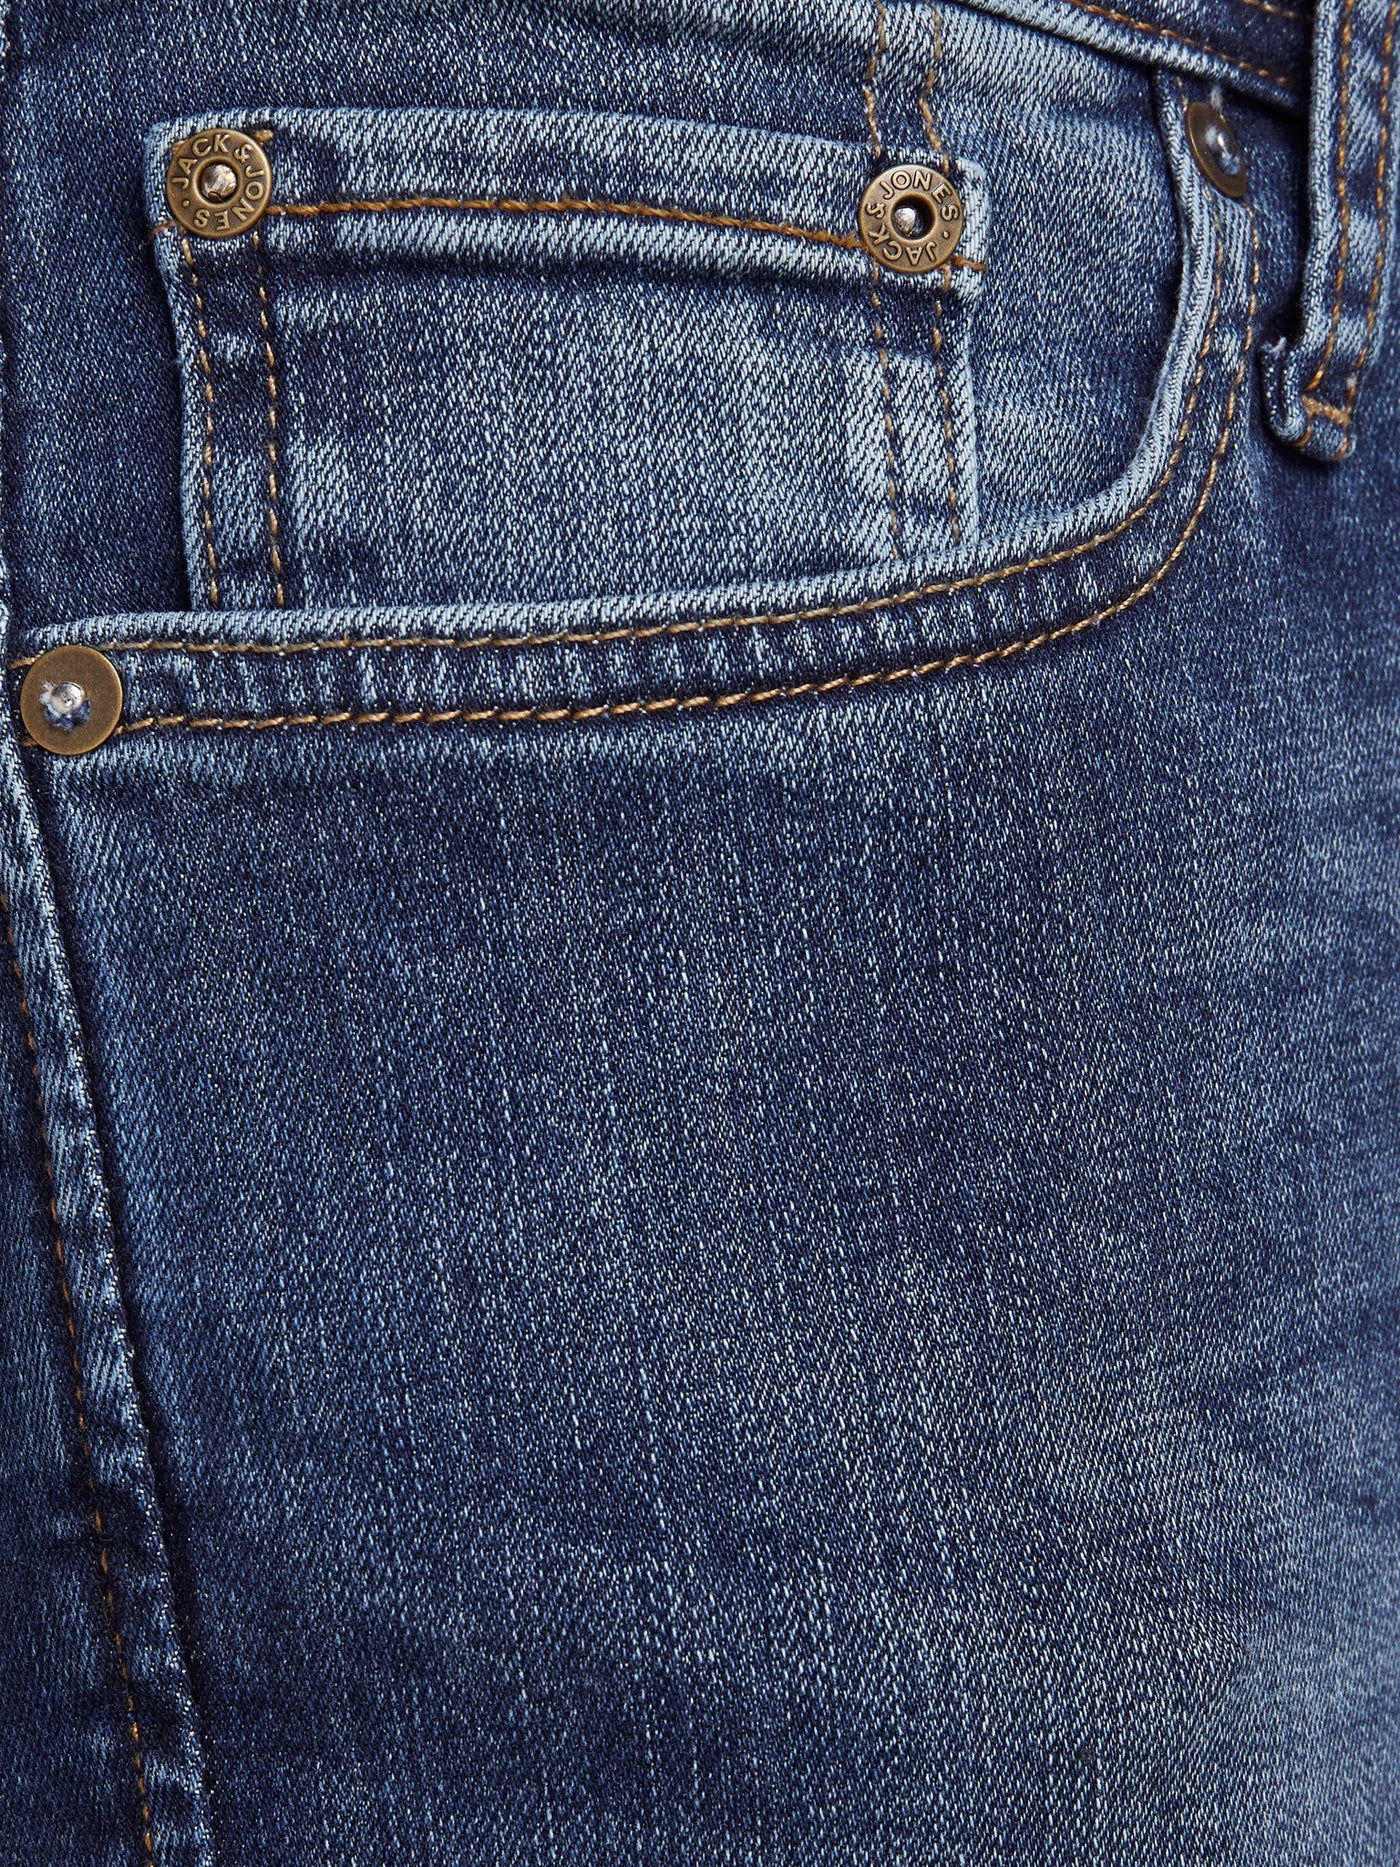 Liam Original Jeans 005 - Blue Denim - Jack & Jones - Blå 3